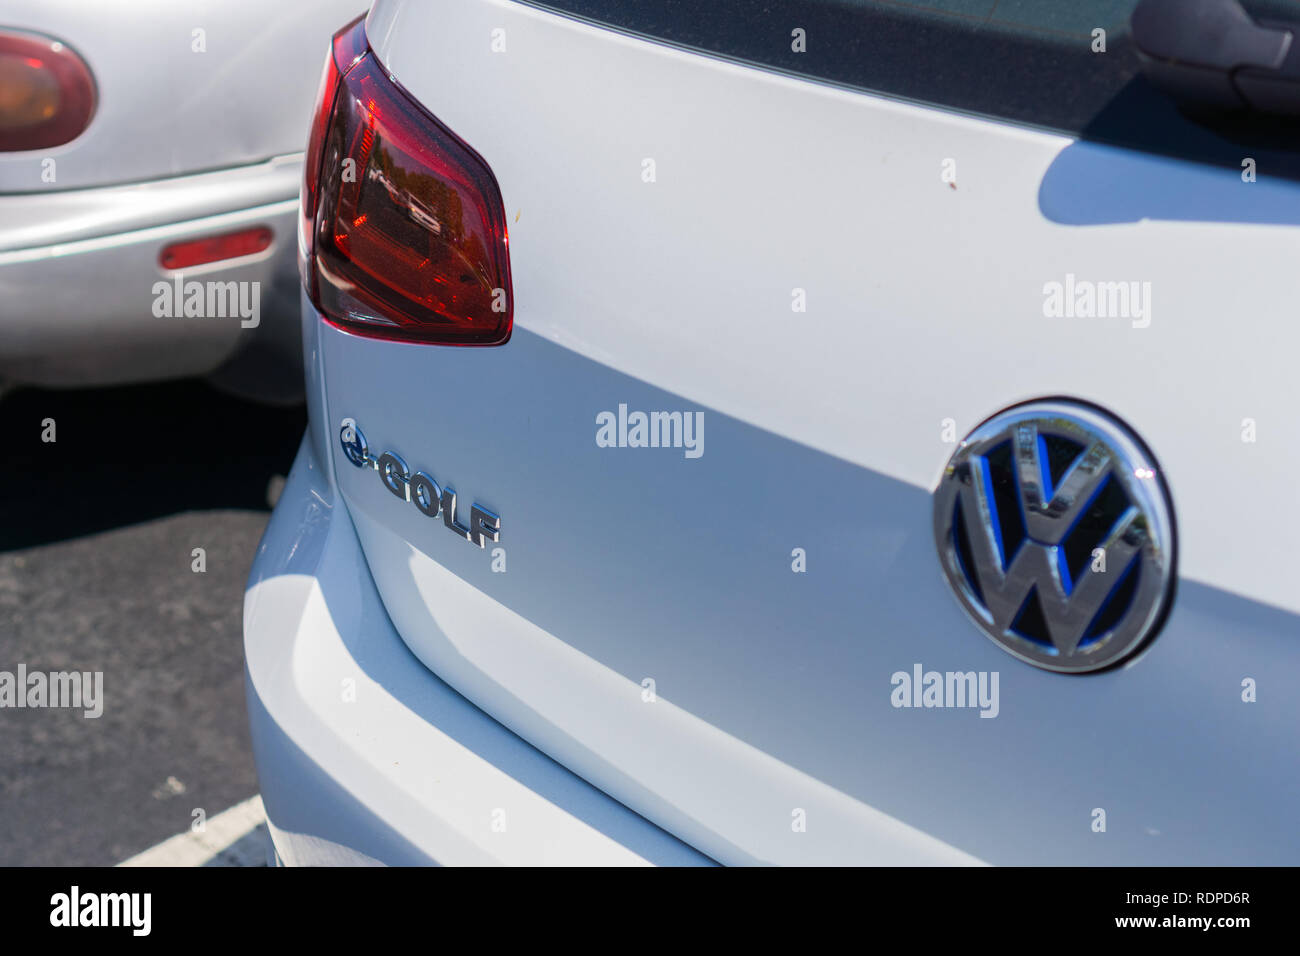 August 24, 2017 Sunnyvale/CA/USA - Details of a VW e-golf car Stock Photo